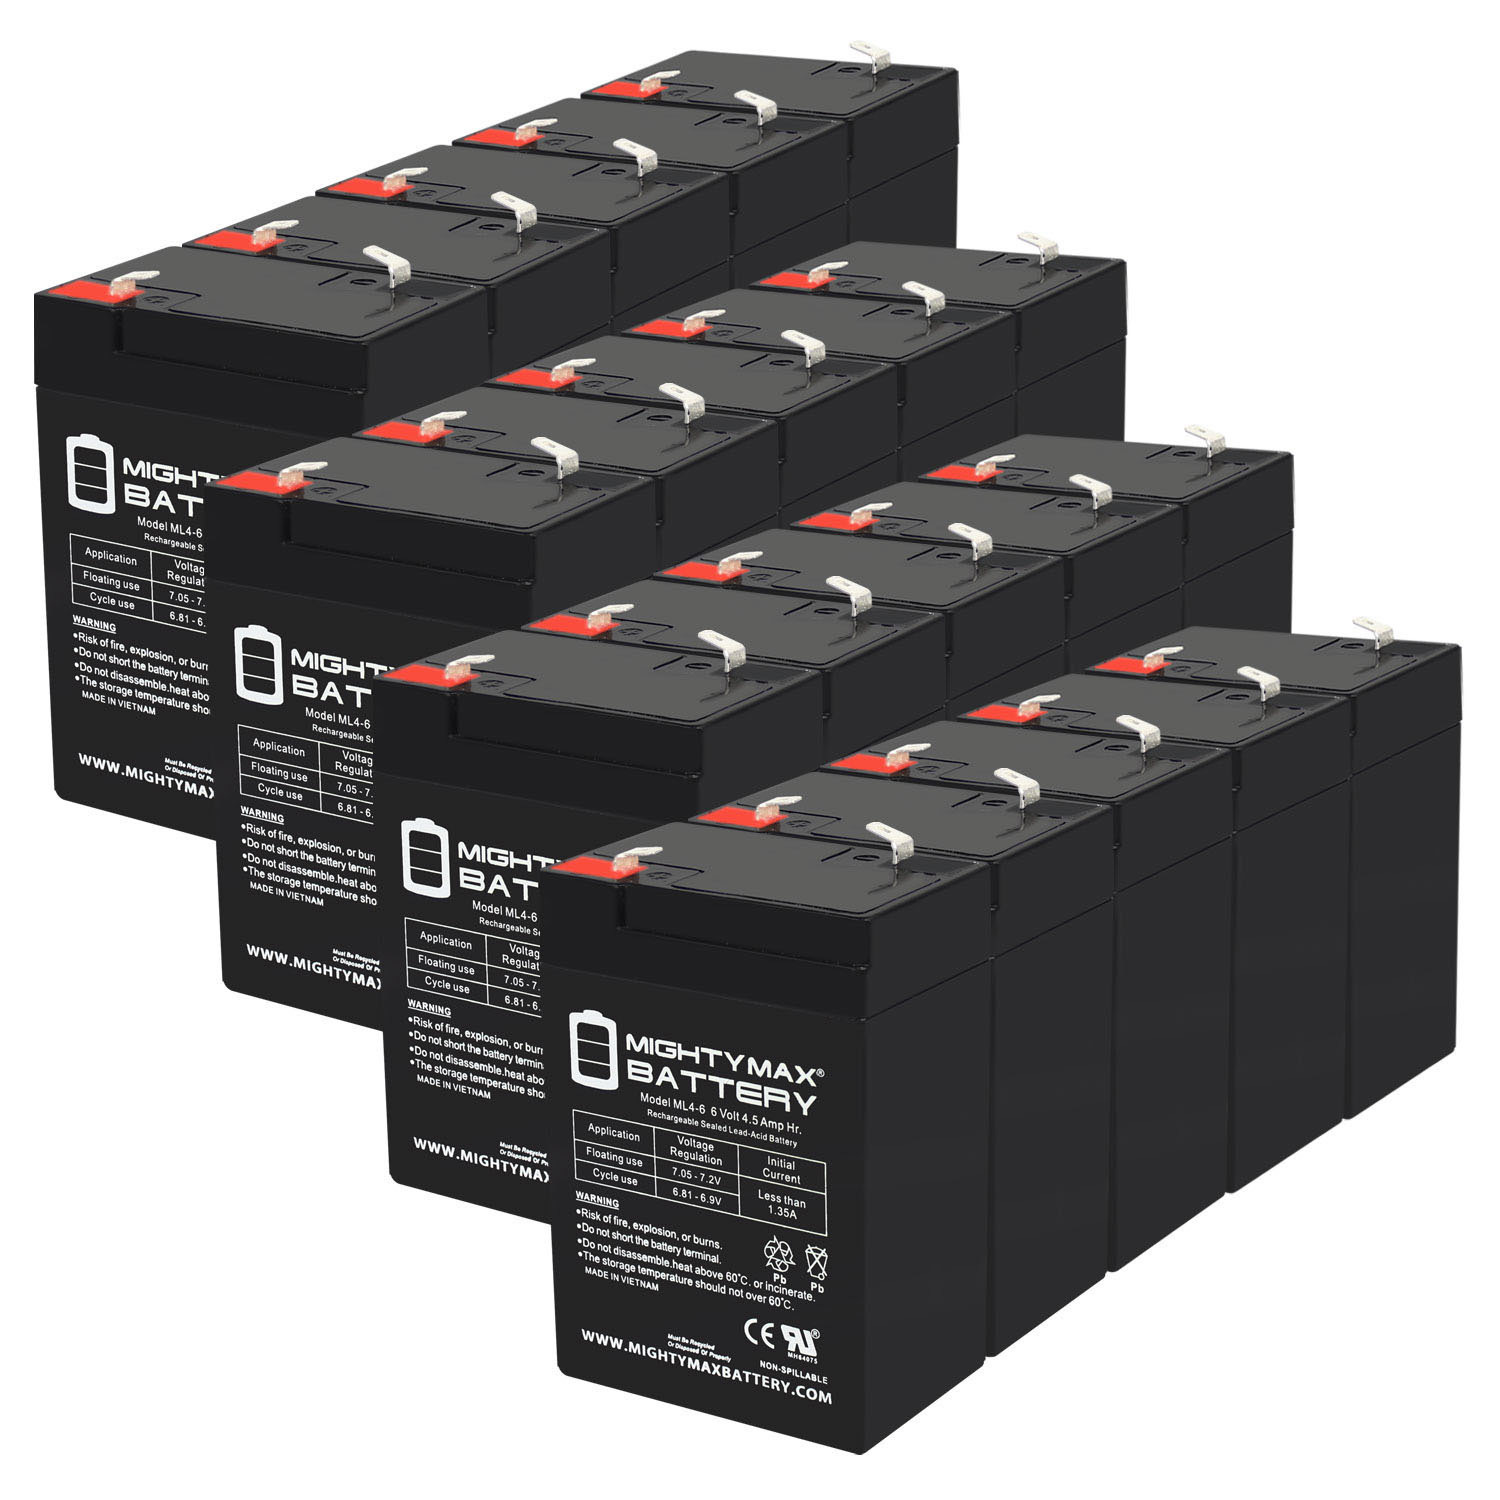 6V 4.5AH SLA Replacement Battery for Exide PowerWare Q6 - 20 Pack